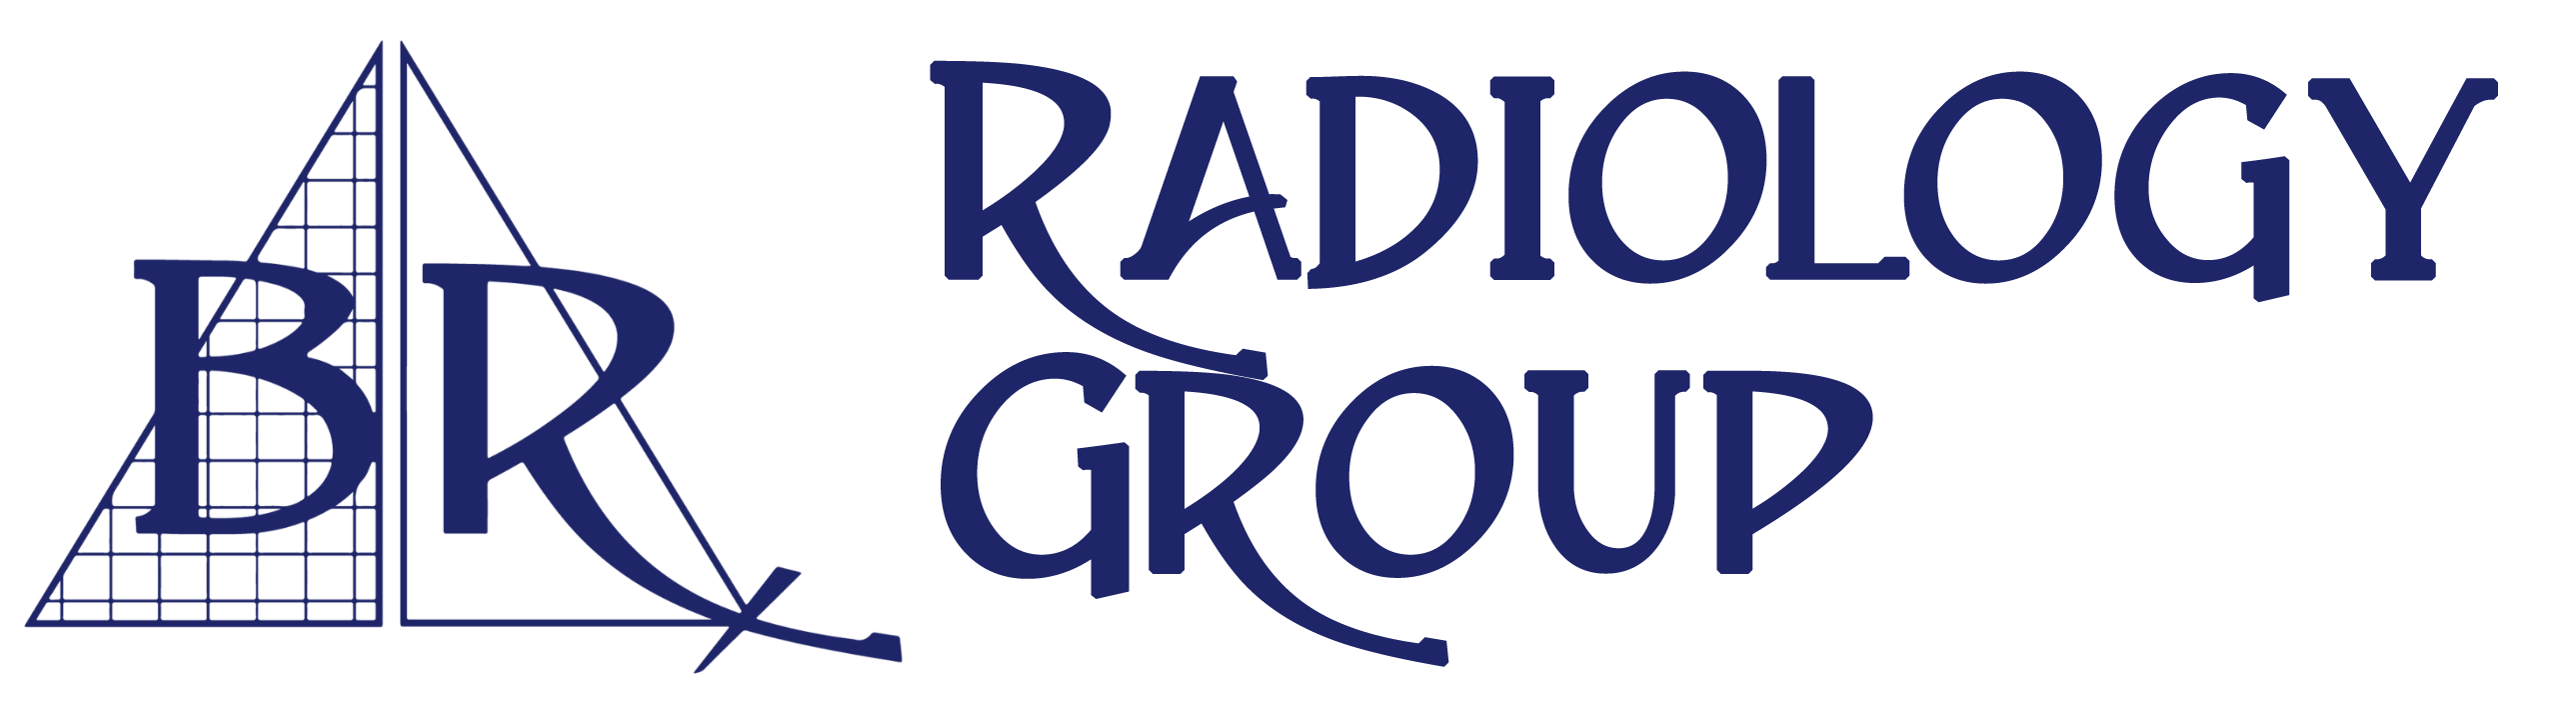 BR Radiology Group